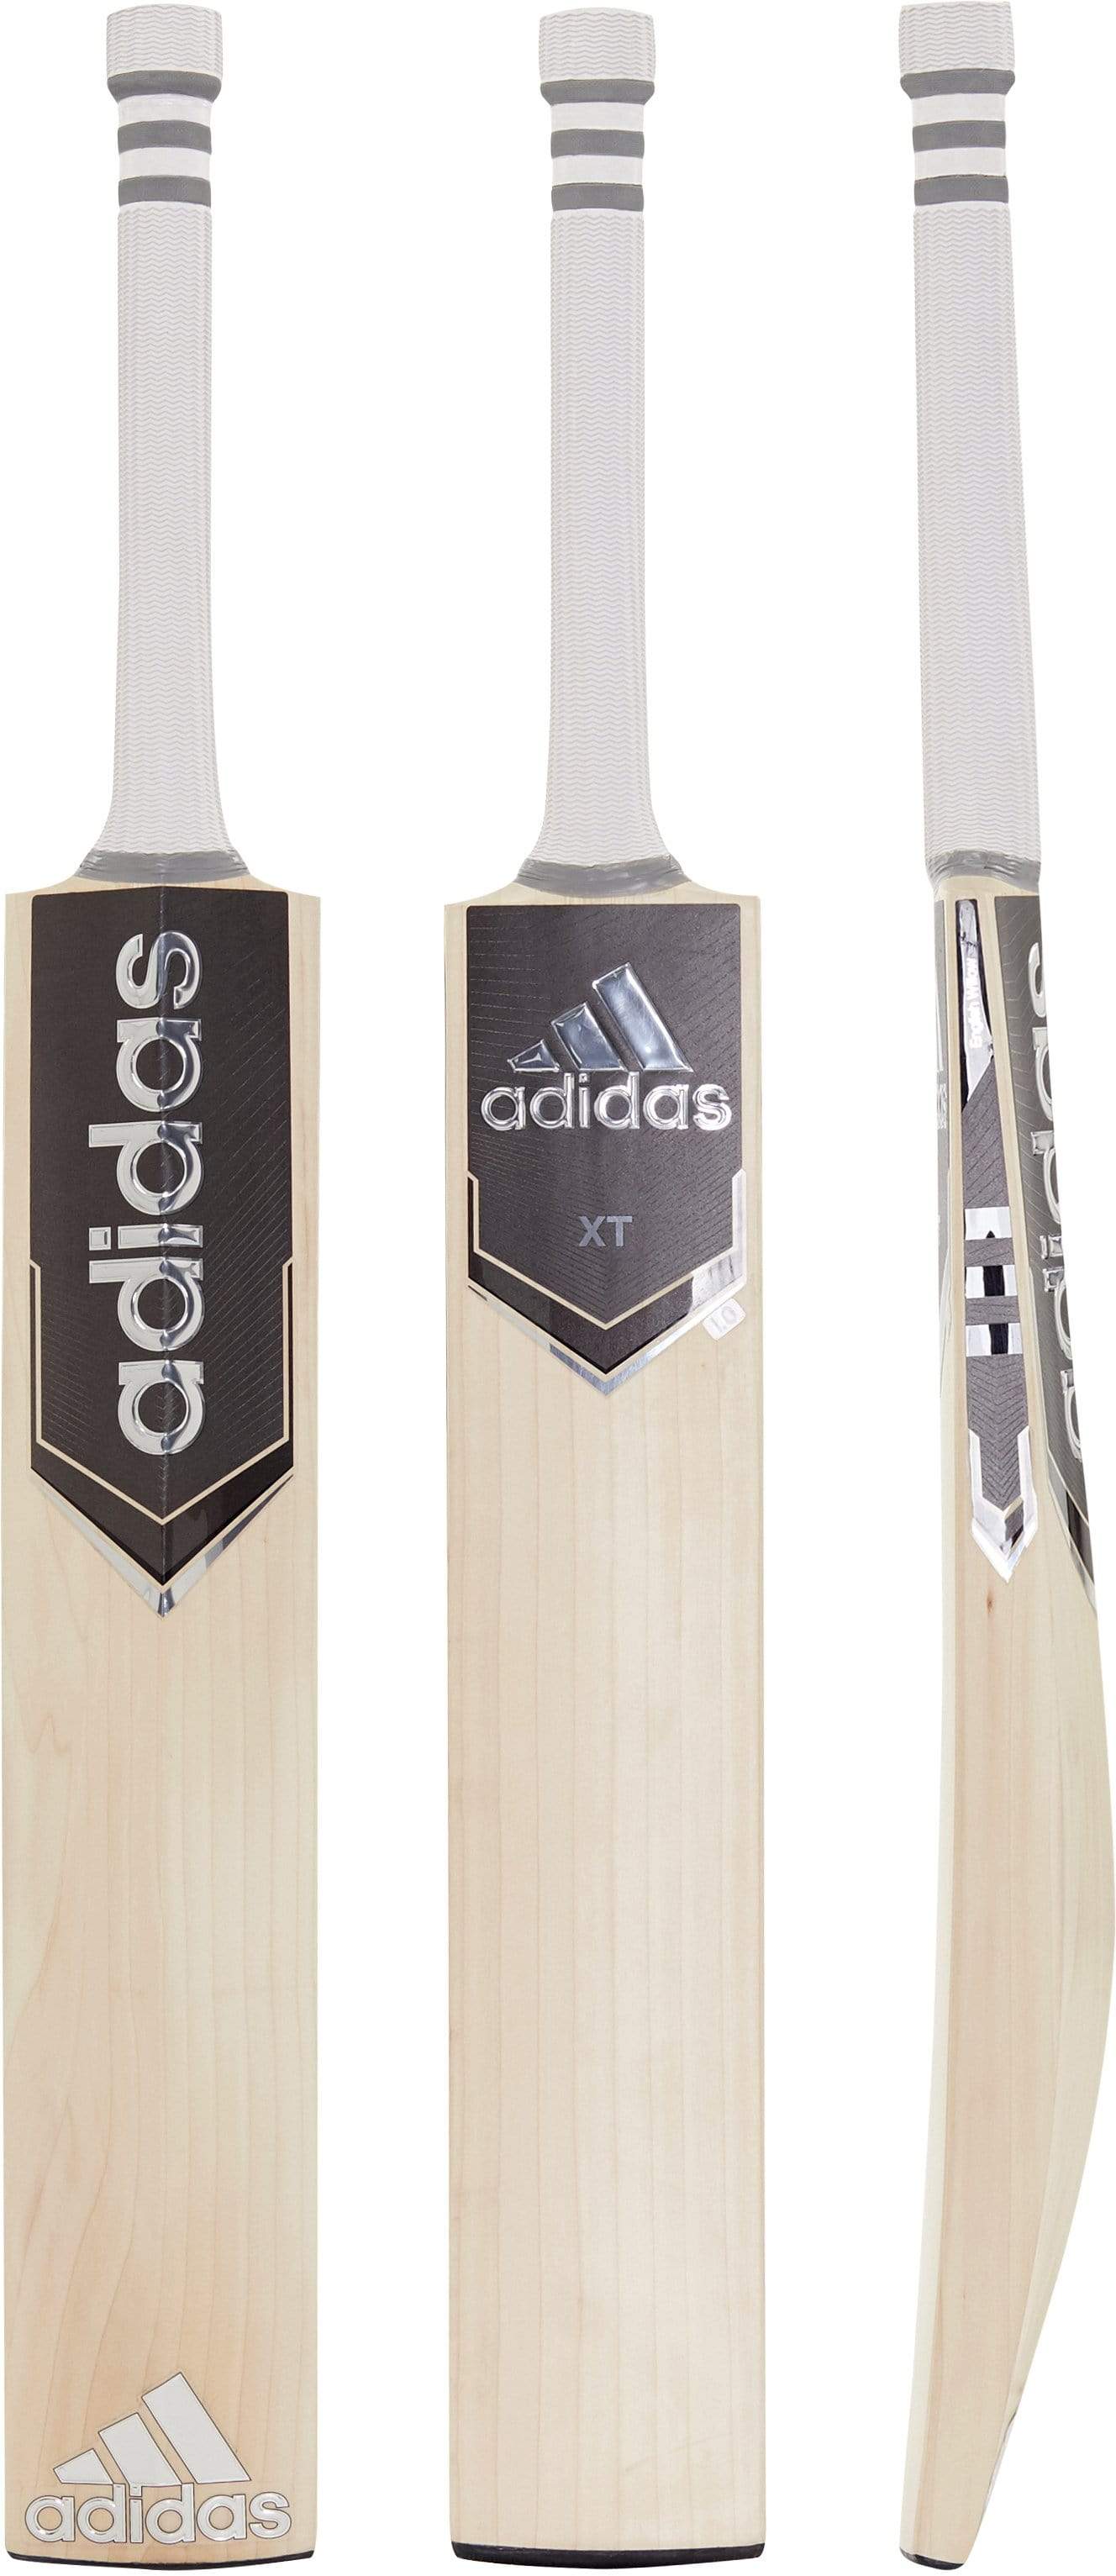 Adidas Cricket Bats Adidas Xt Grey 2.0 Senior Cricket Bat